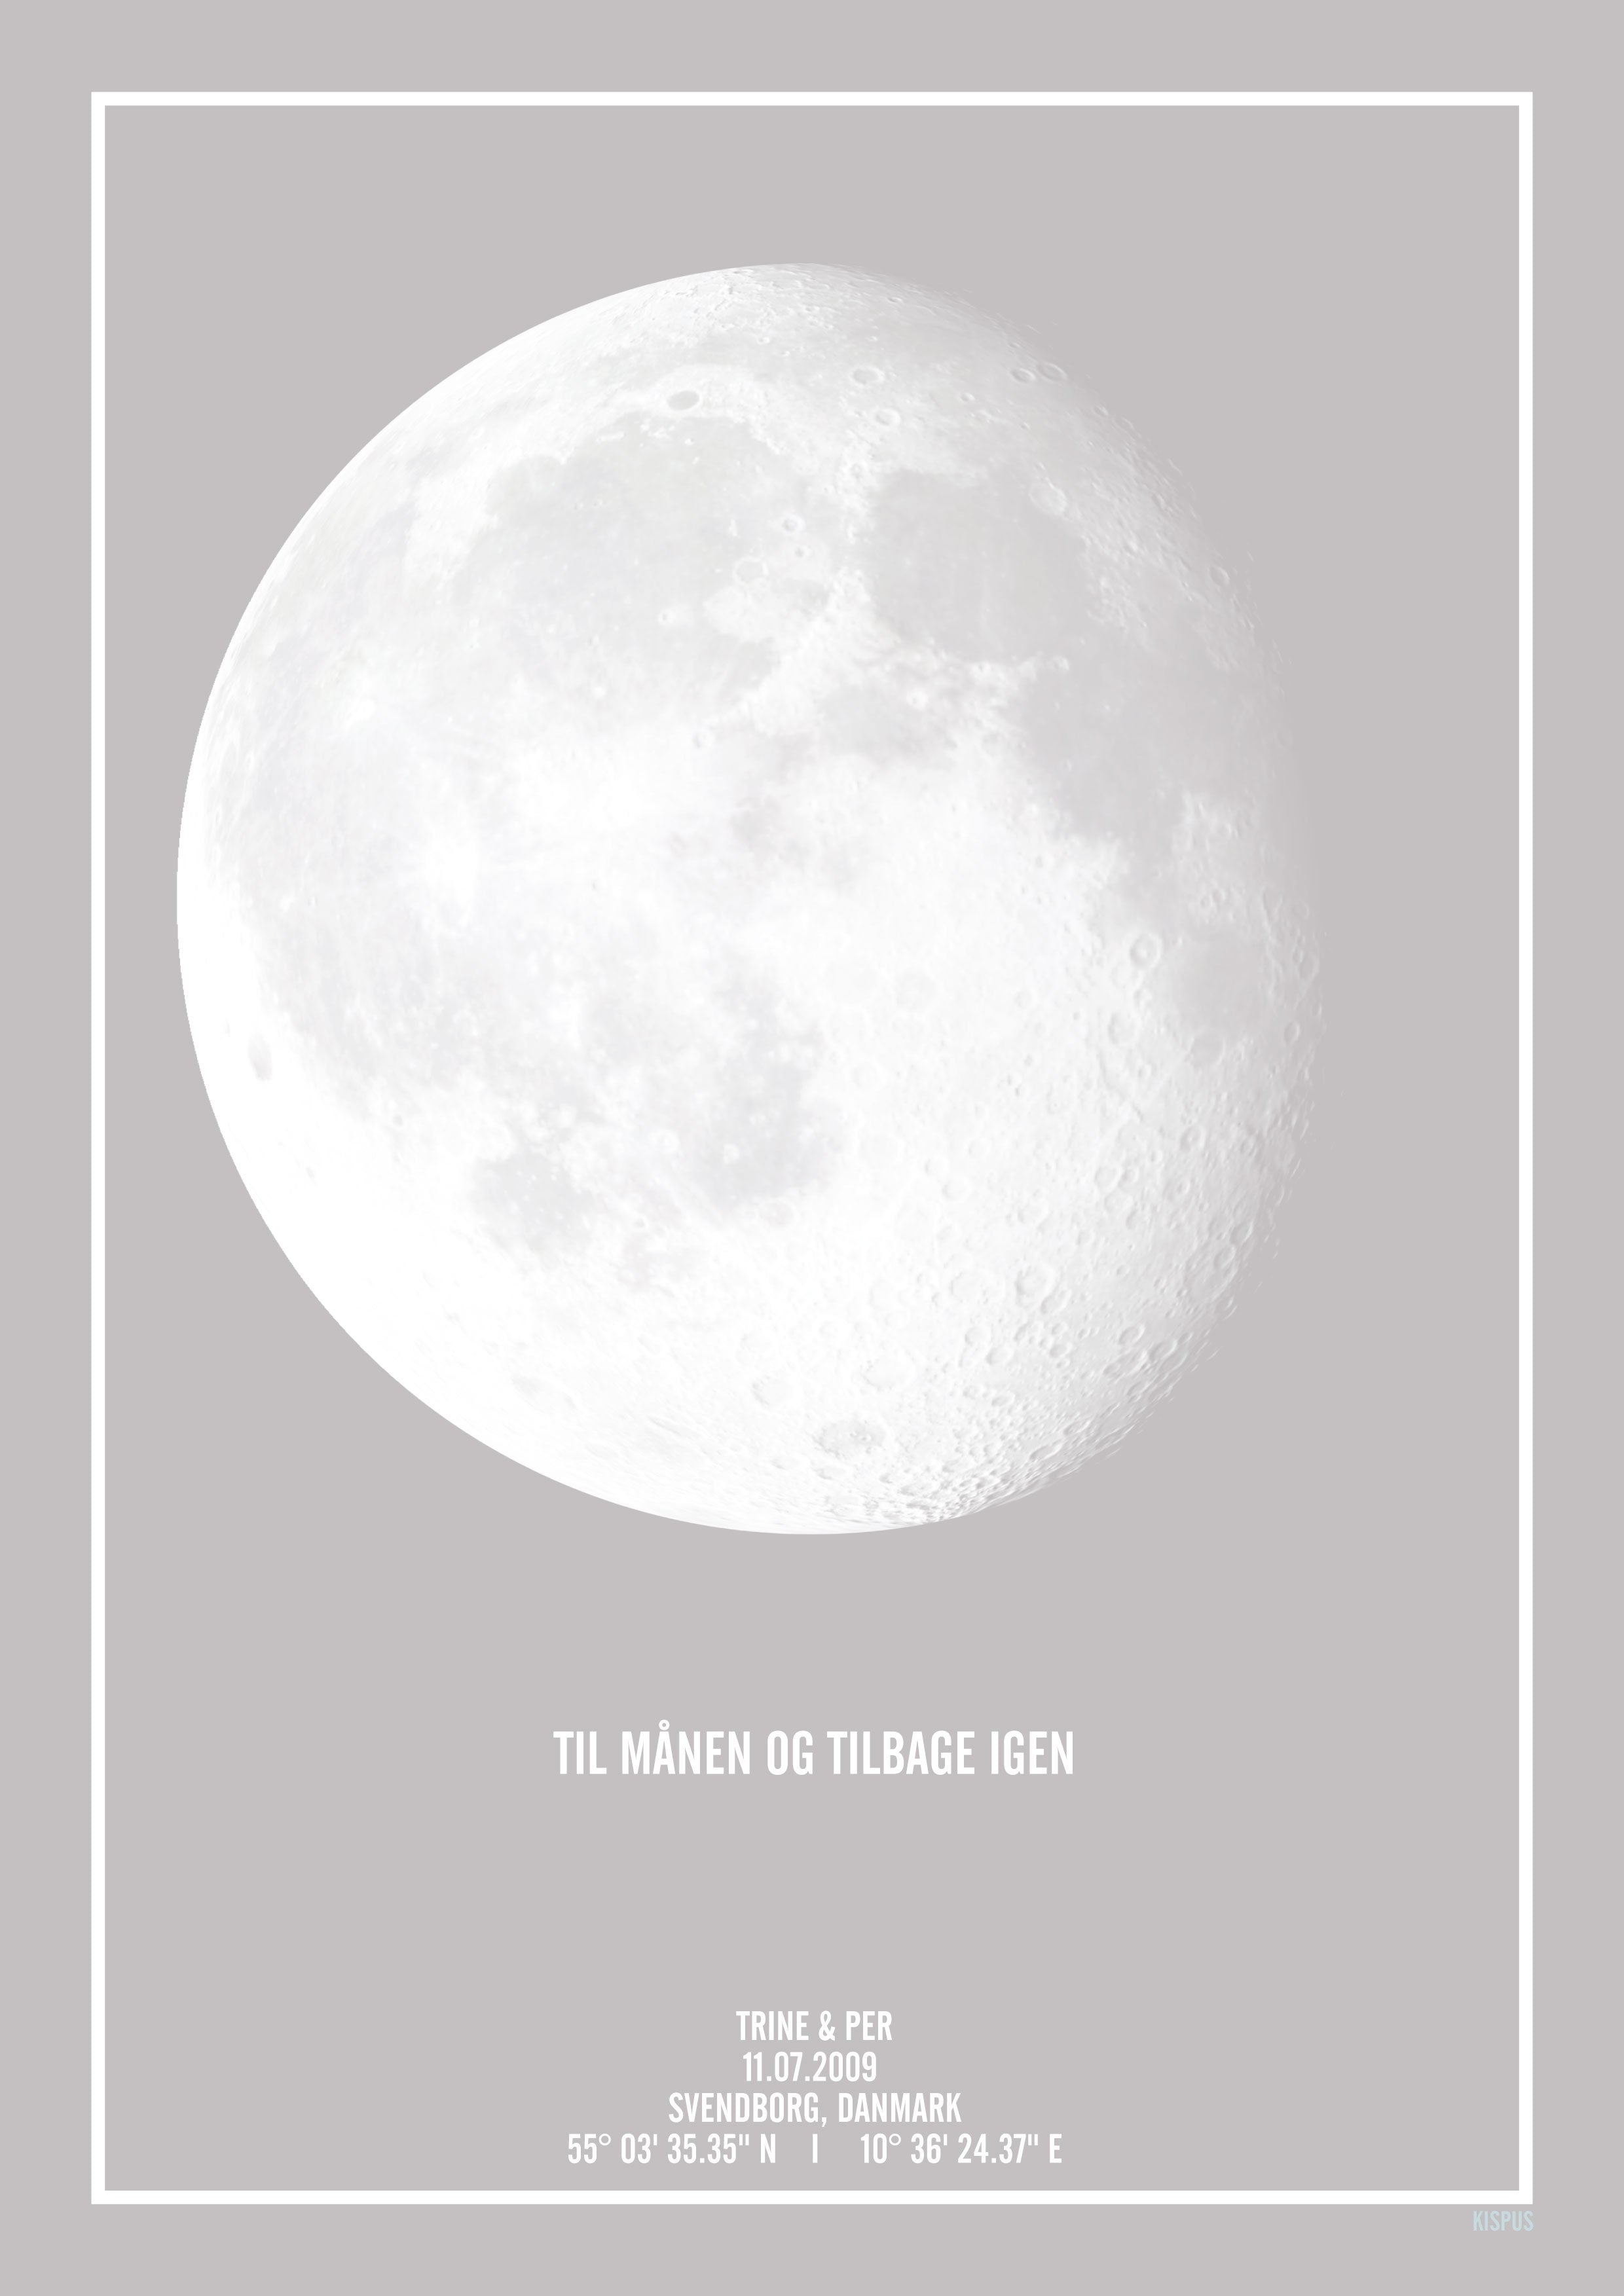 Lysegrå måne plakat med tekst "Til månen og tilbage igen".